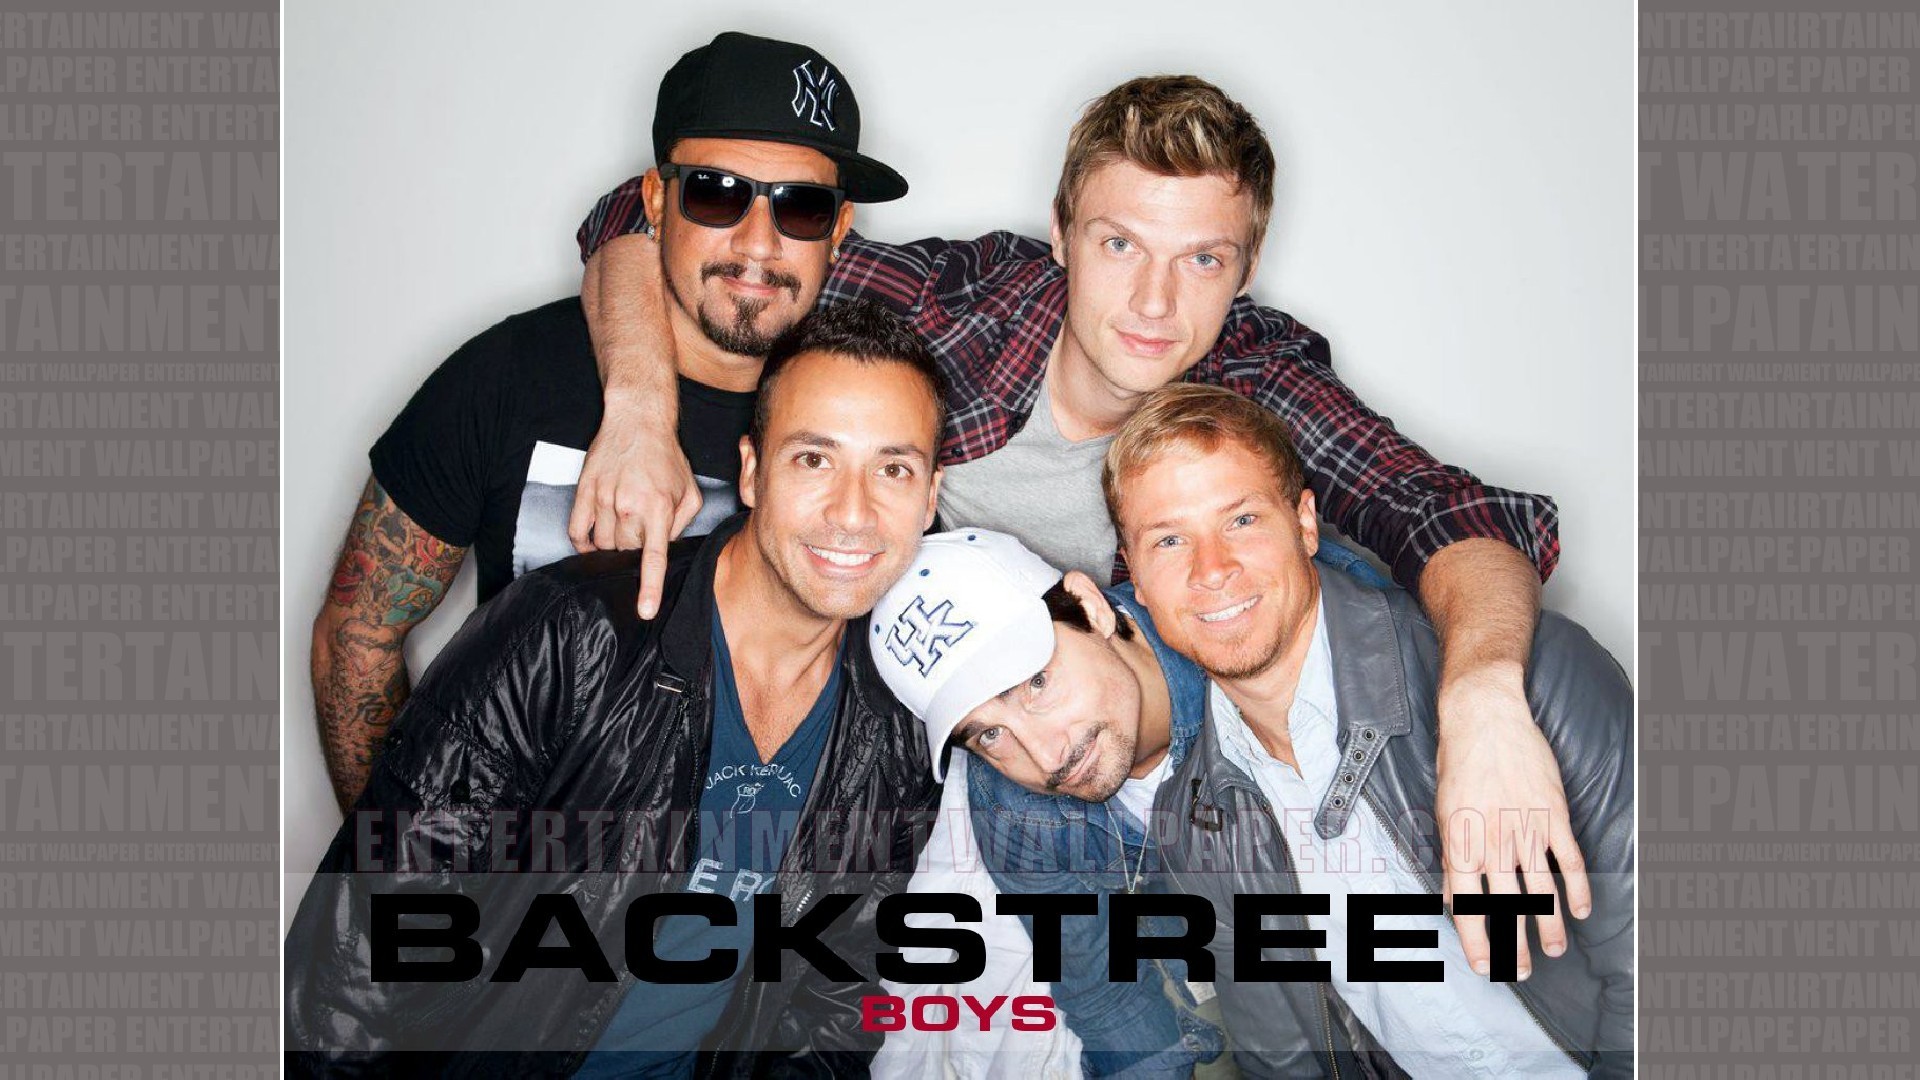 1920x1080 Backstreet Boys Wallpaper - Original size, download now.